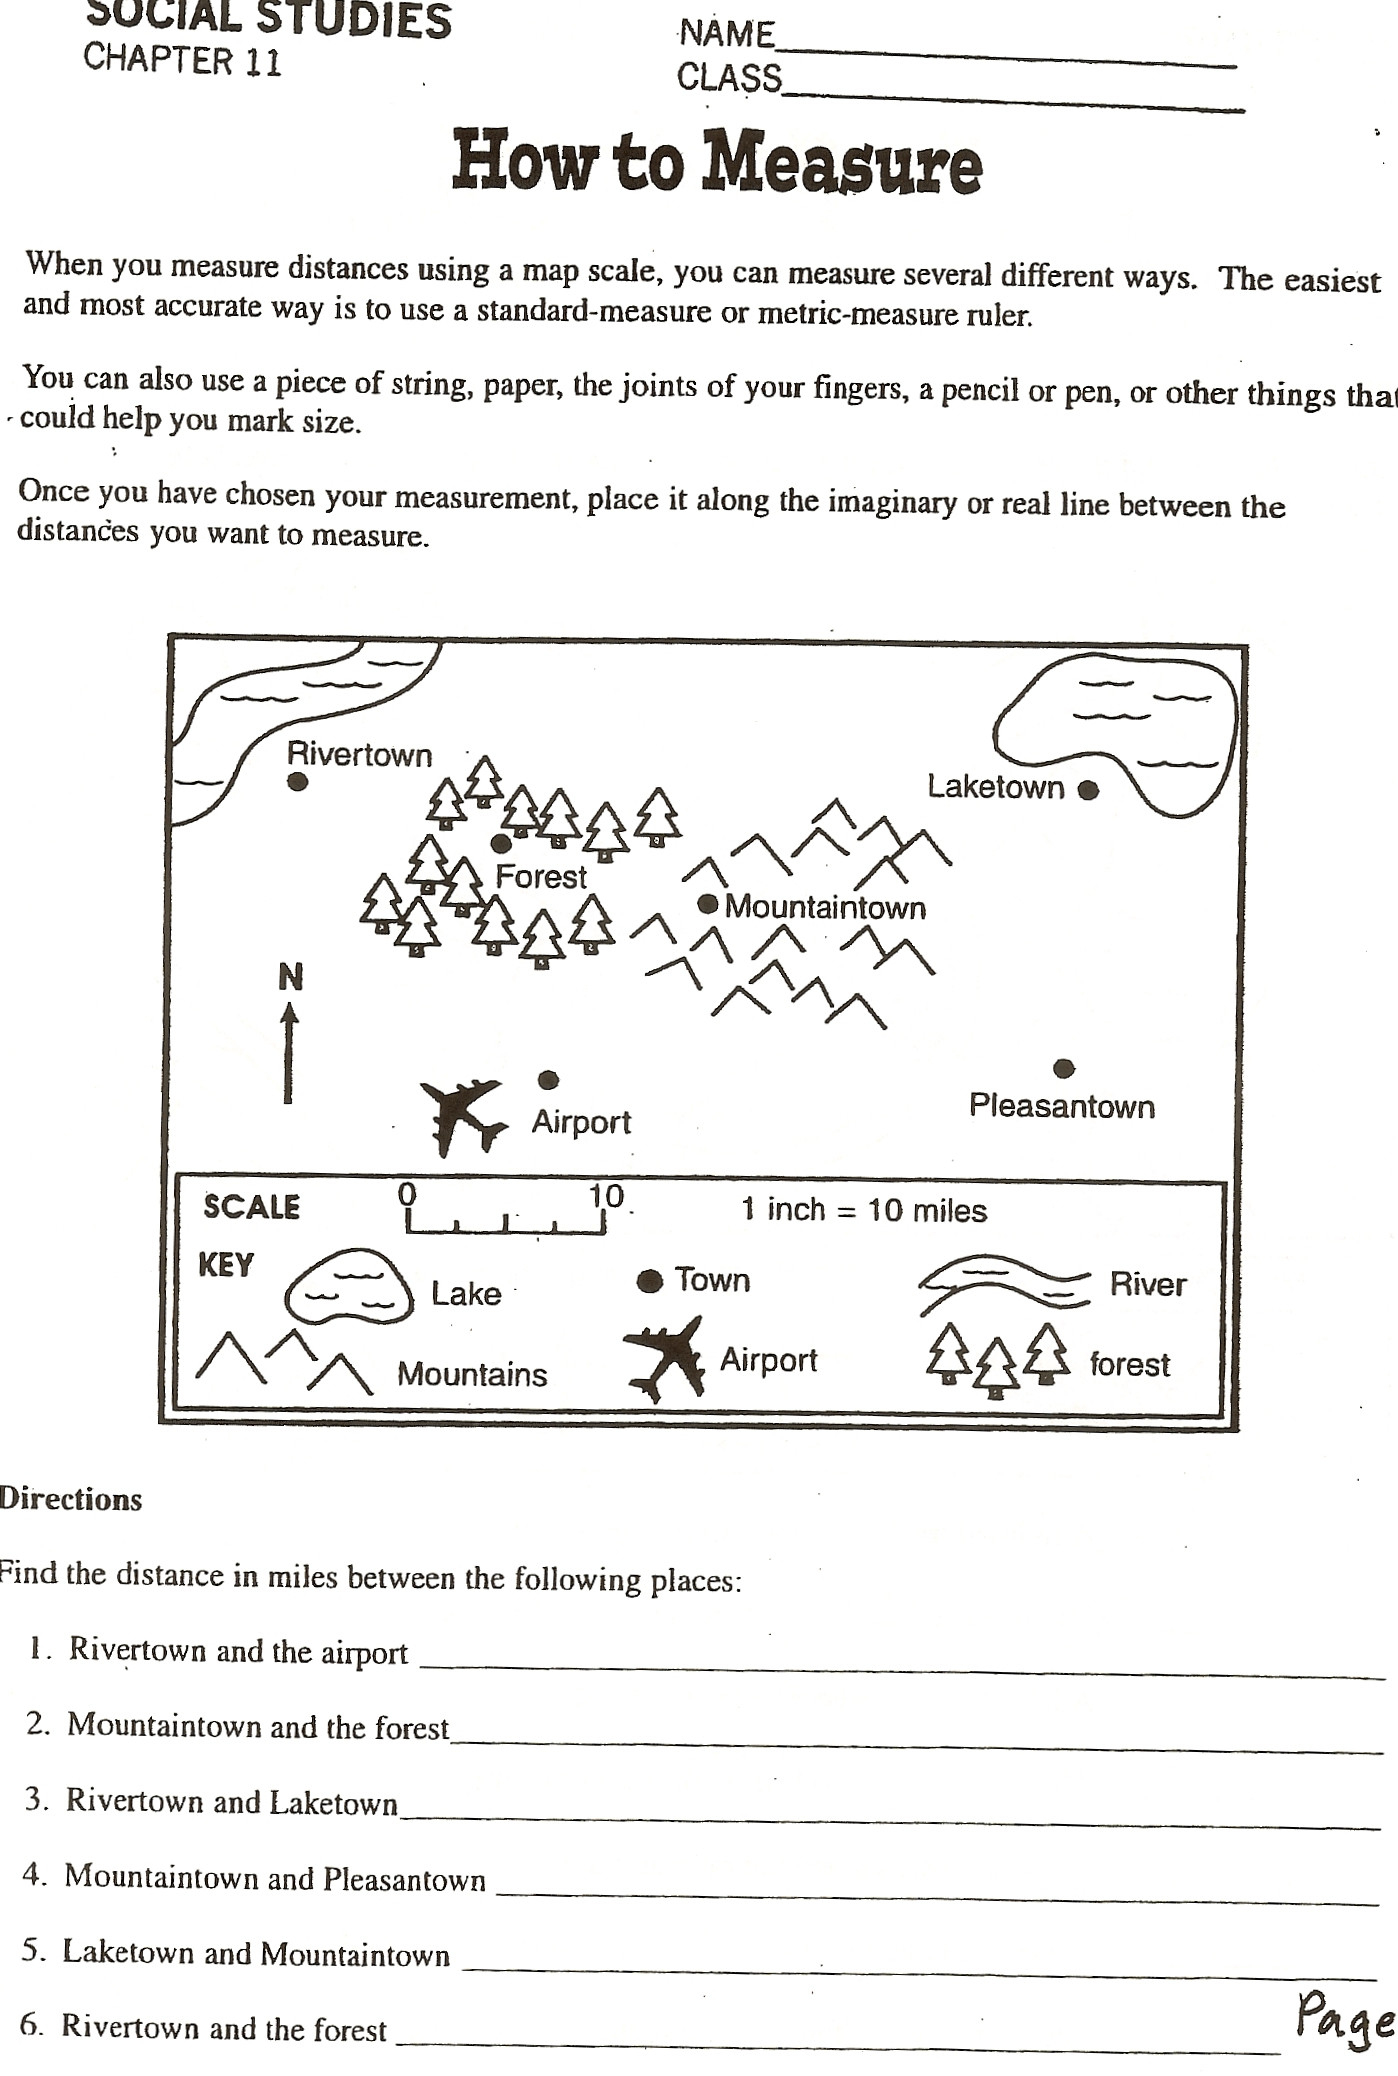 Printable Map Skills Worksheets For 4th Grade Unique Social Stu S 6th Grade Worksheets